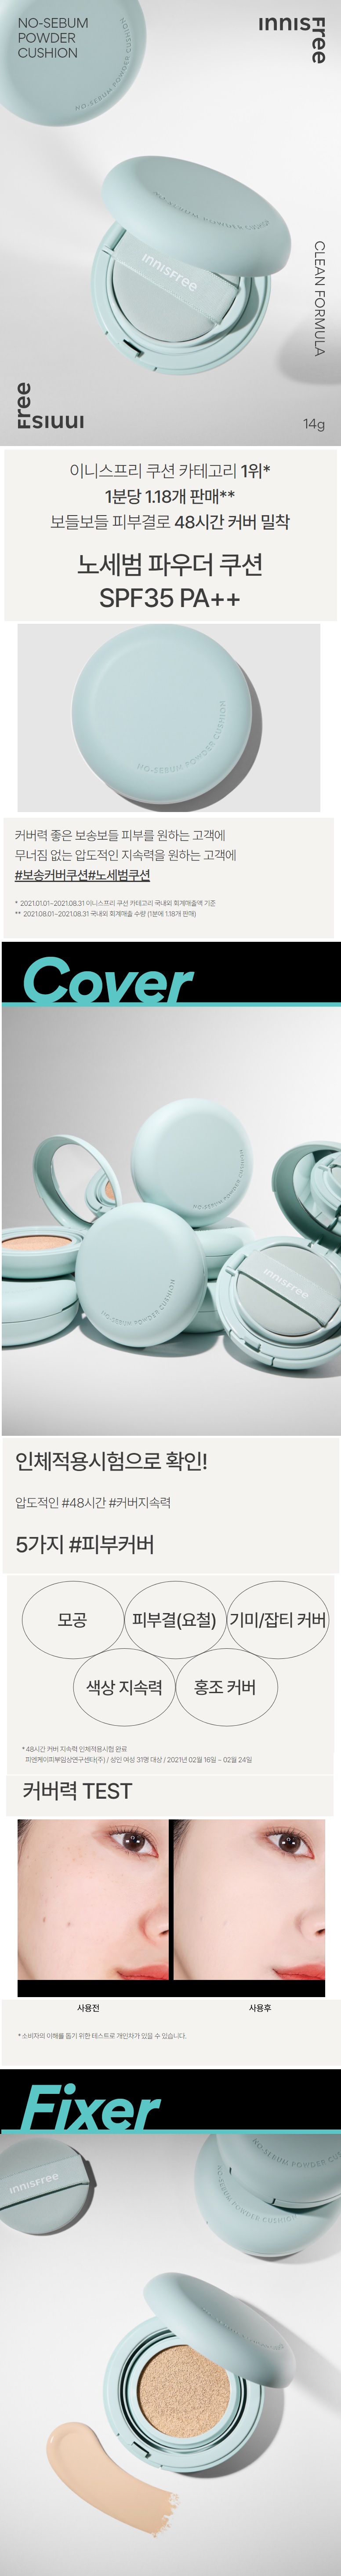 Innisfree No Sebum Powder Cushion korean skincare product online shop malaysia china poland1